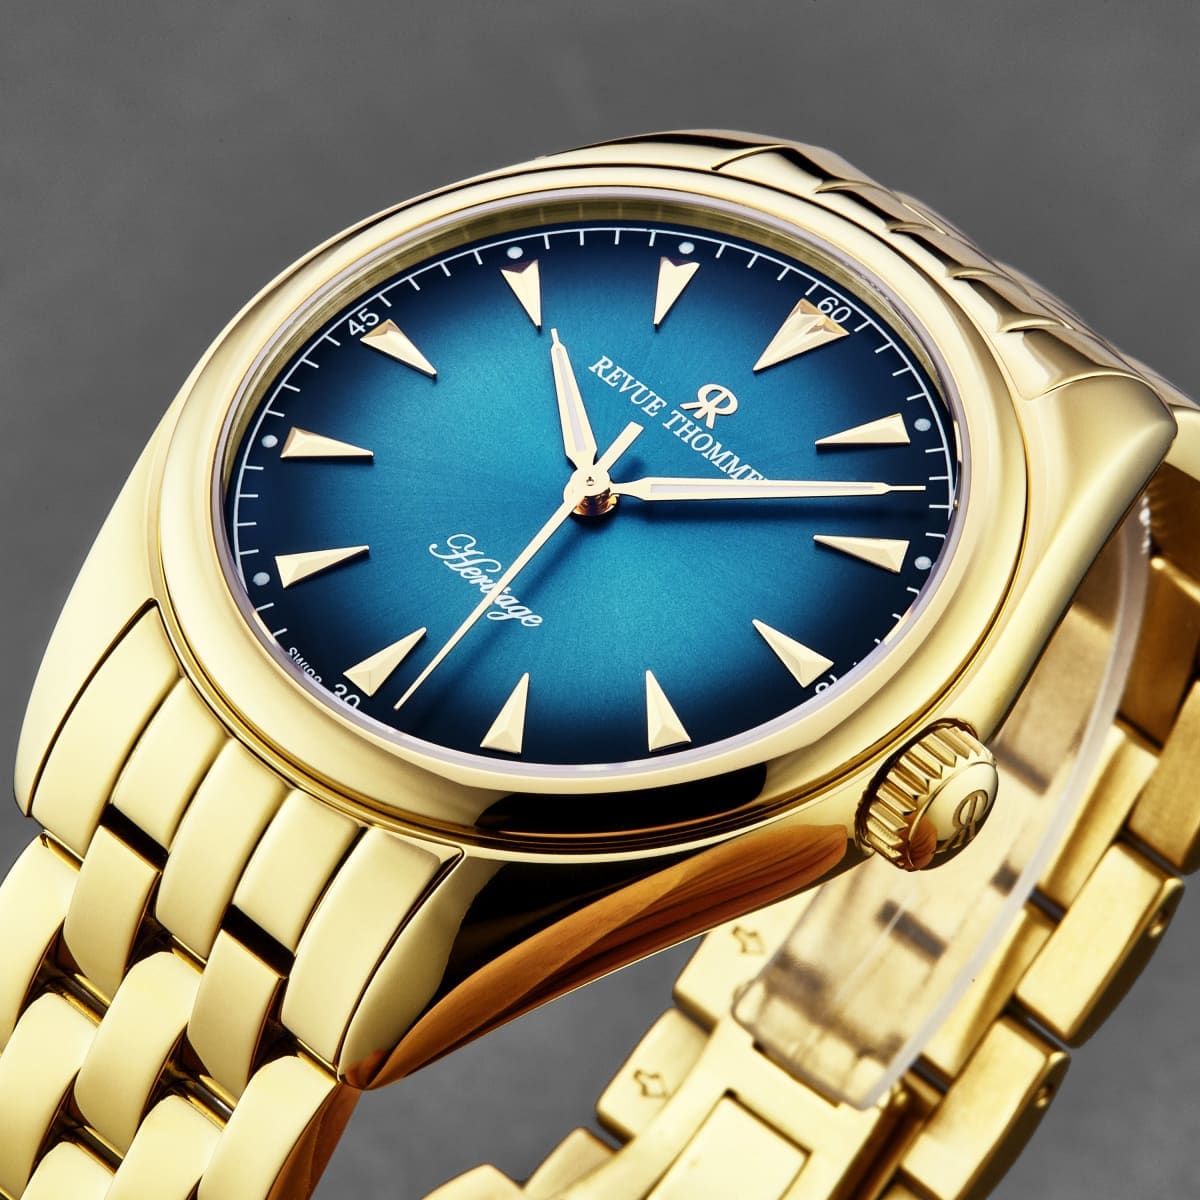 Revue Thommen Men’s ’Heritage’ Blue Dial Stainless Steel Bracelet Automatic Watch 21010.2115 - On sale